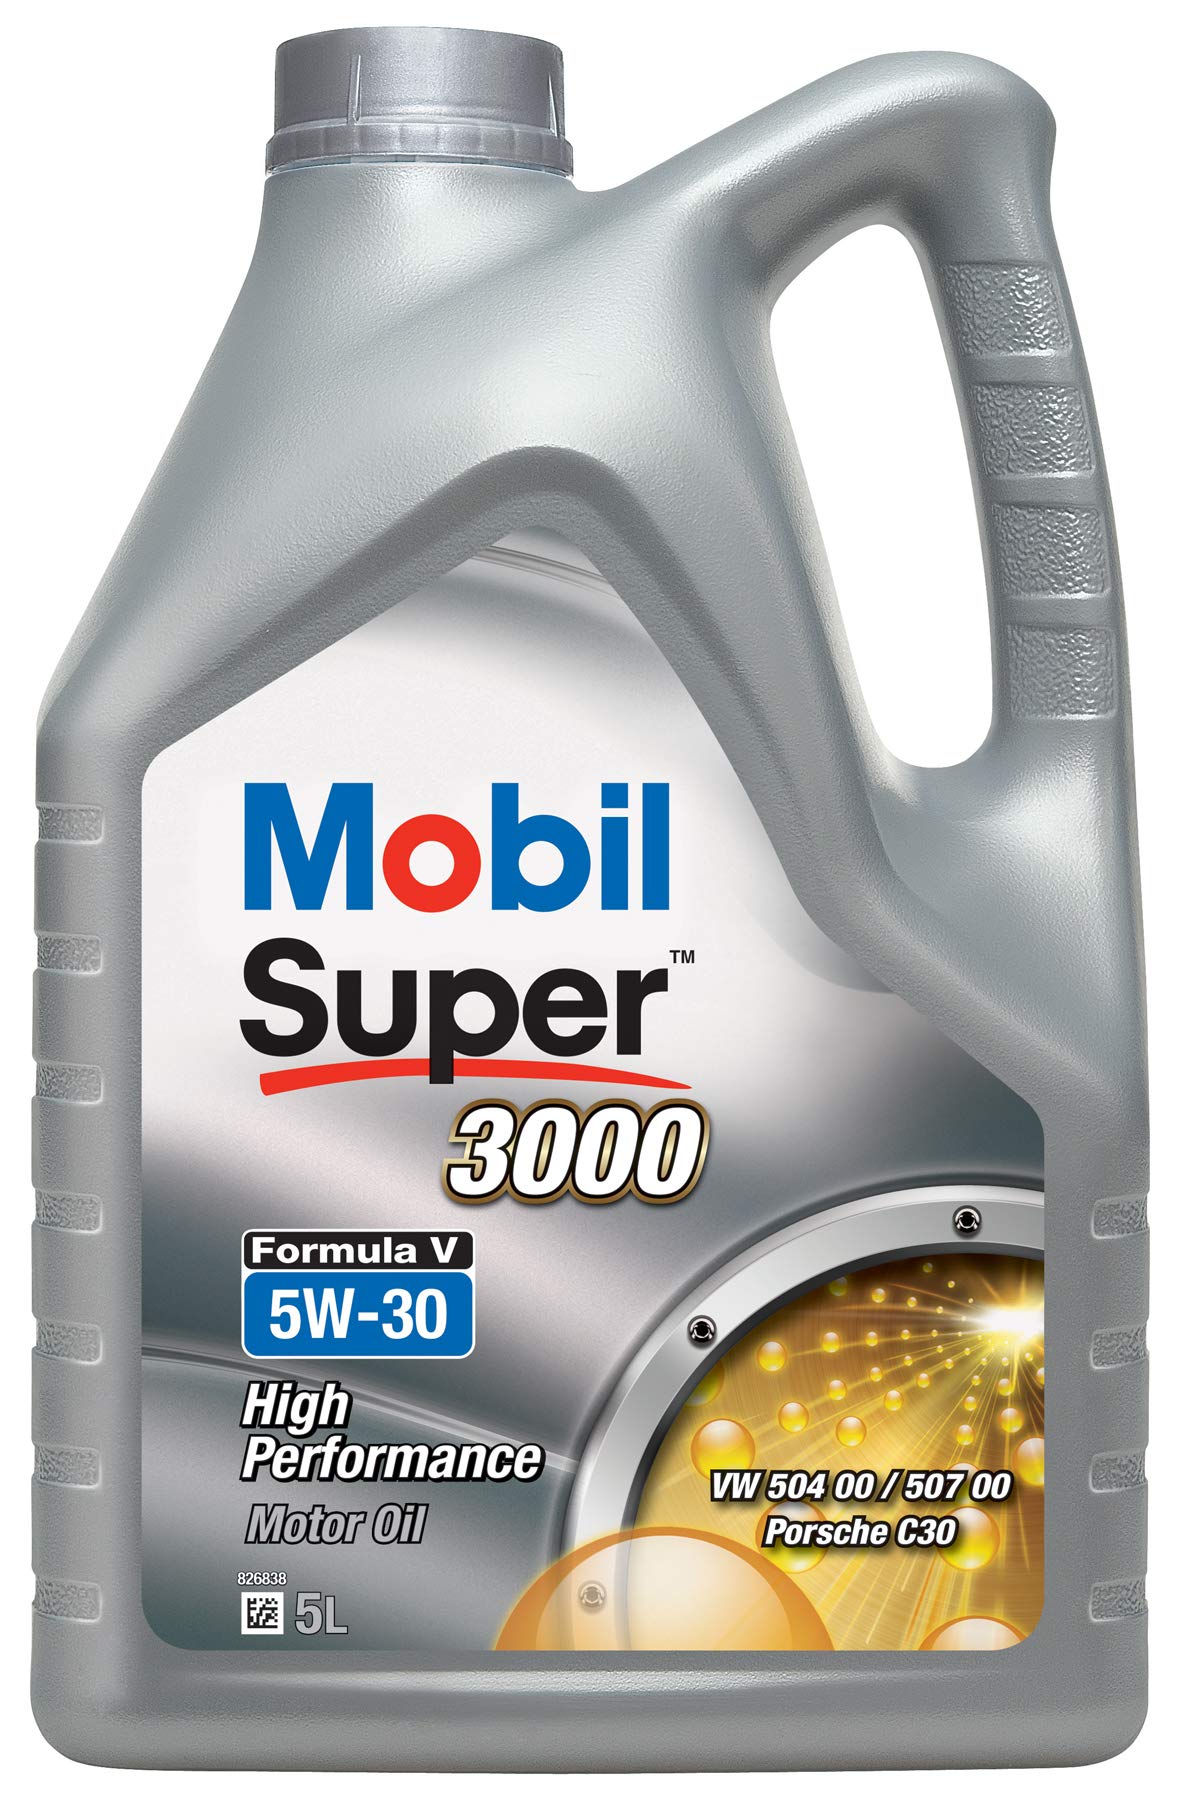 Mobil Super 3000 Formula V 5W-30, 5L von Mobil